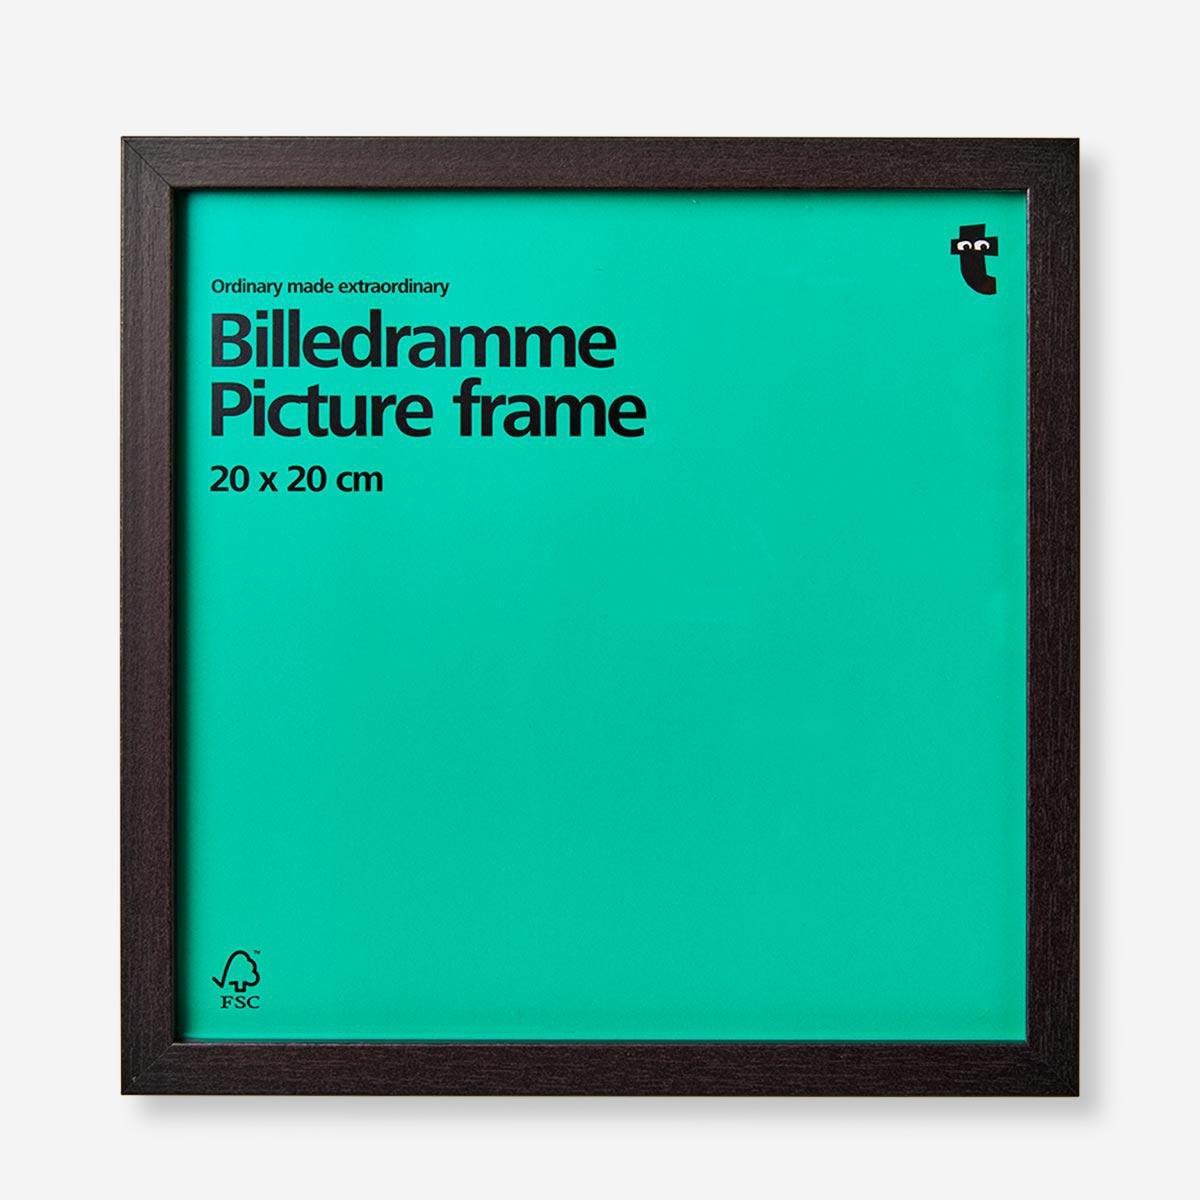 Black picture frame